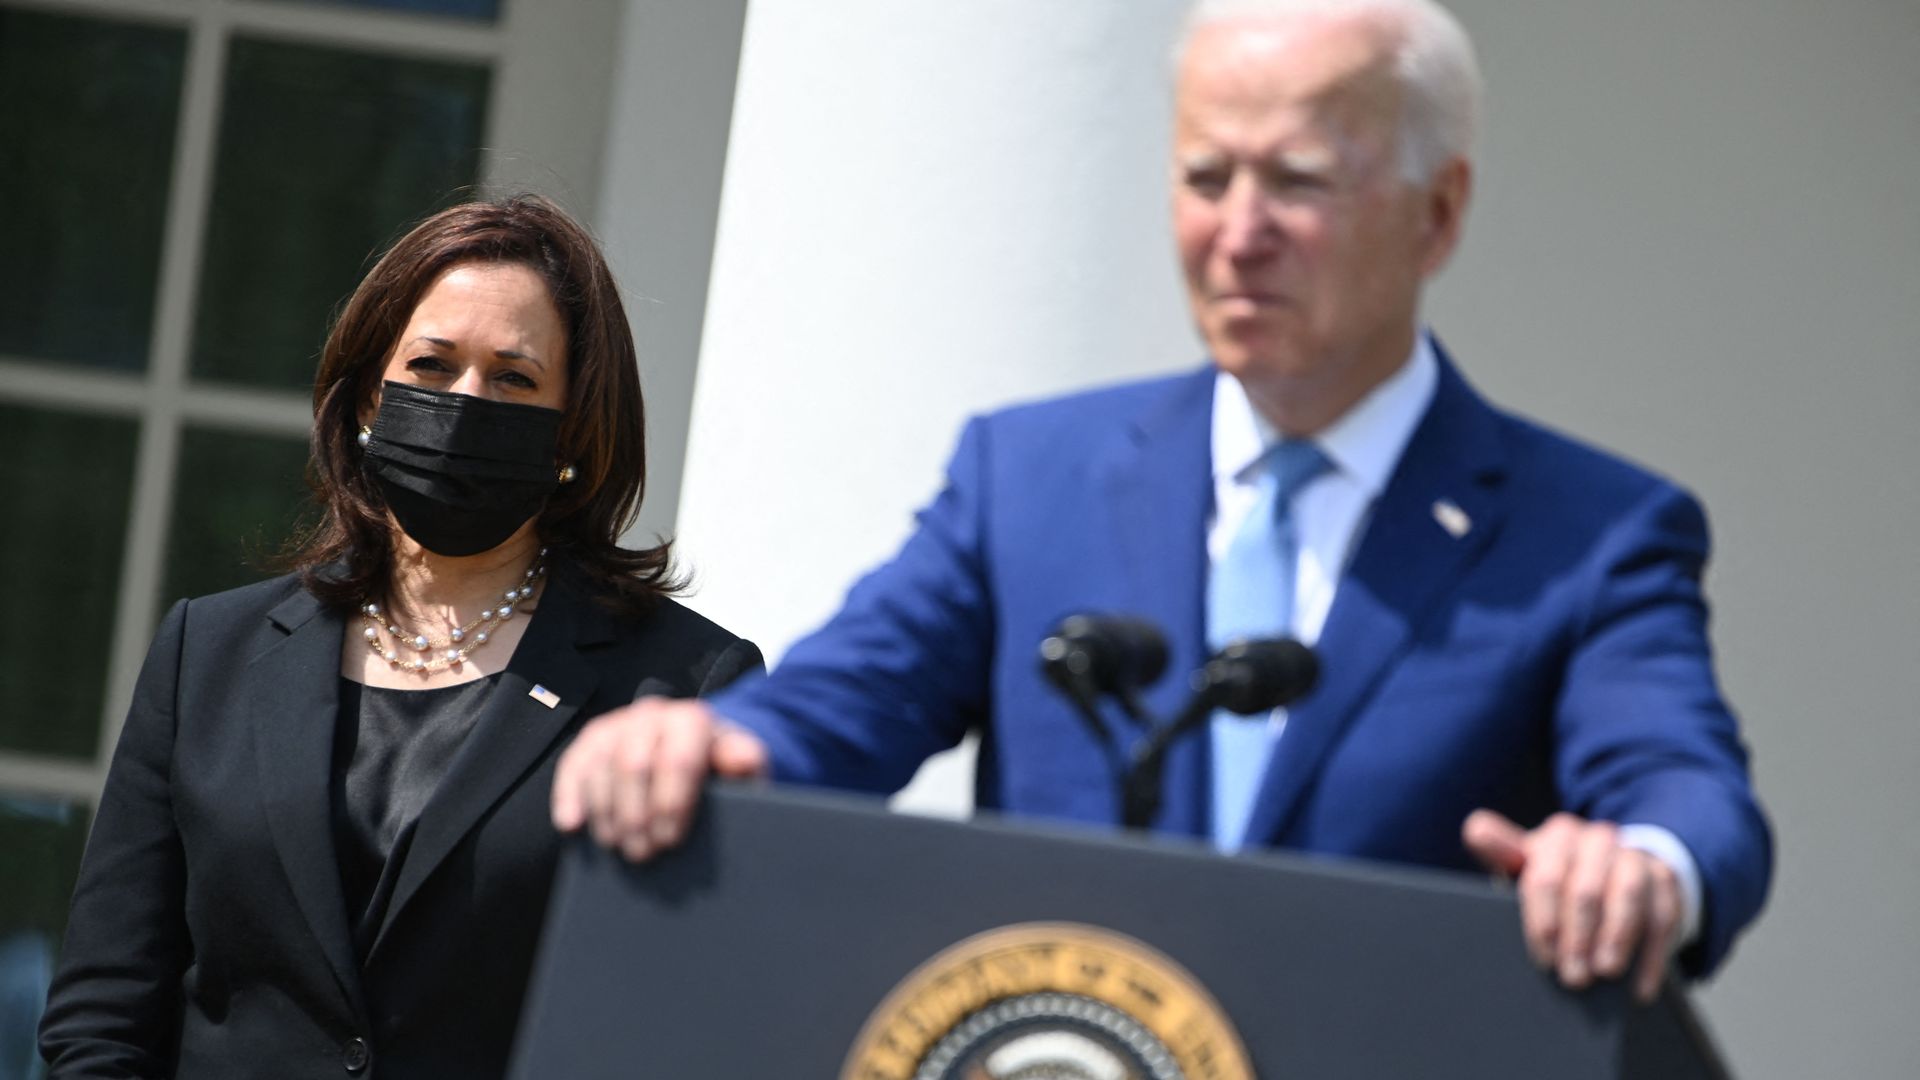 Photo of Kamala Harris standing next to Joe Biden as he speaks from behind a podium